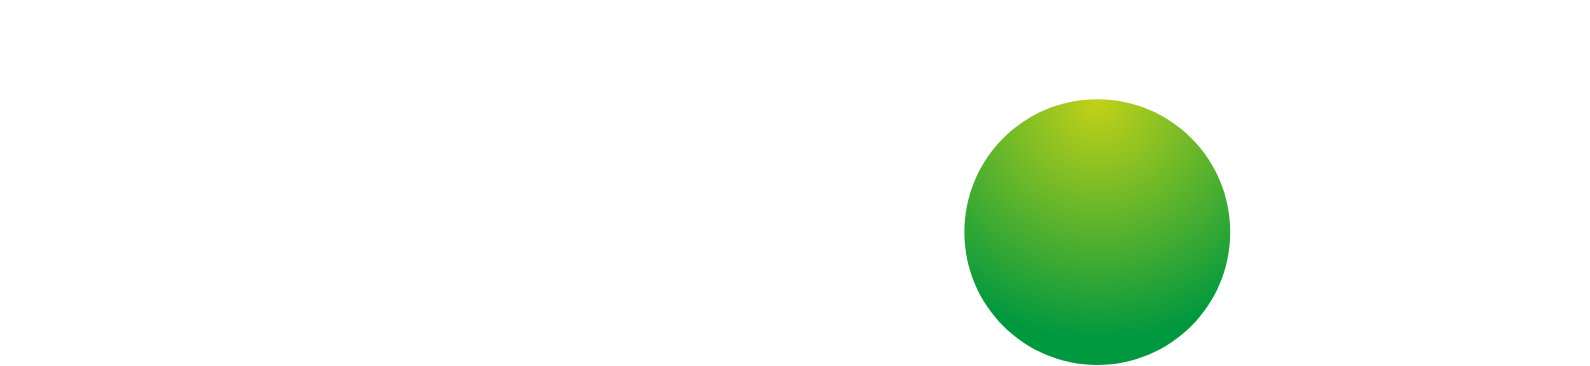 Kainos Group logo large for dark backgrounds (transparent PNG)